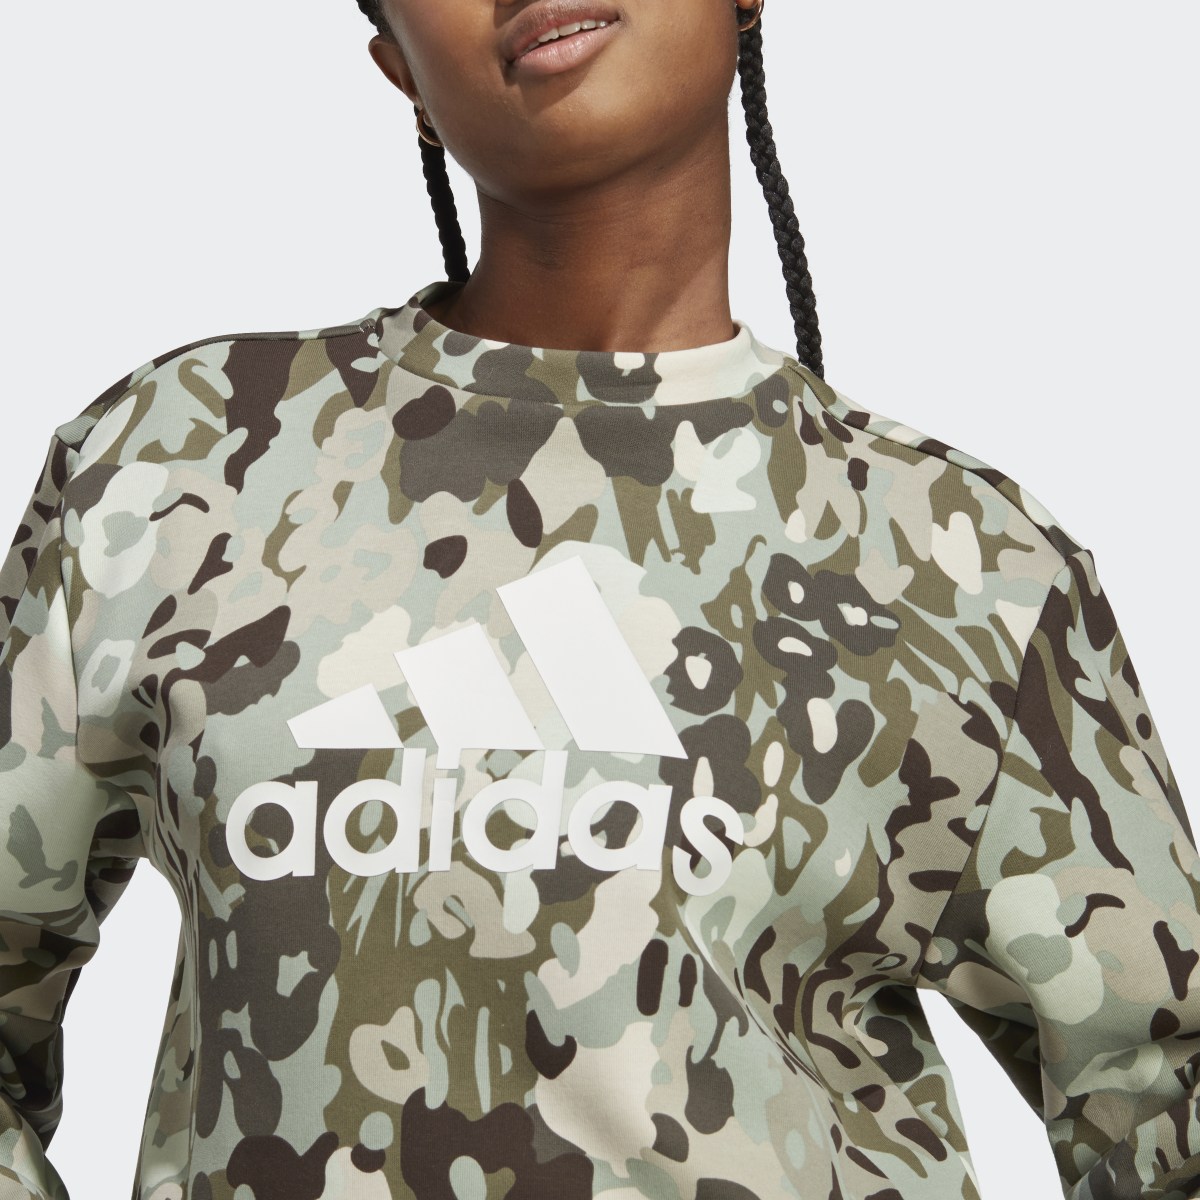 Adidas Graphic Sweatshirt. 6